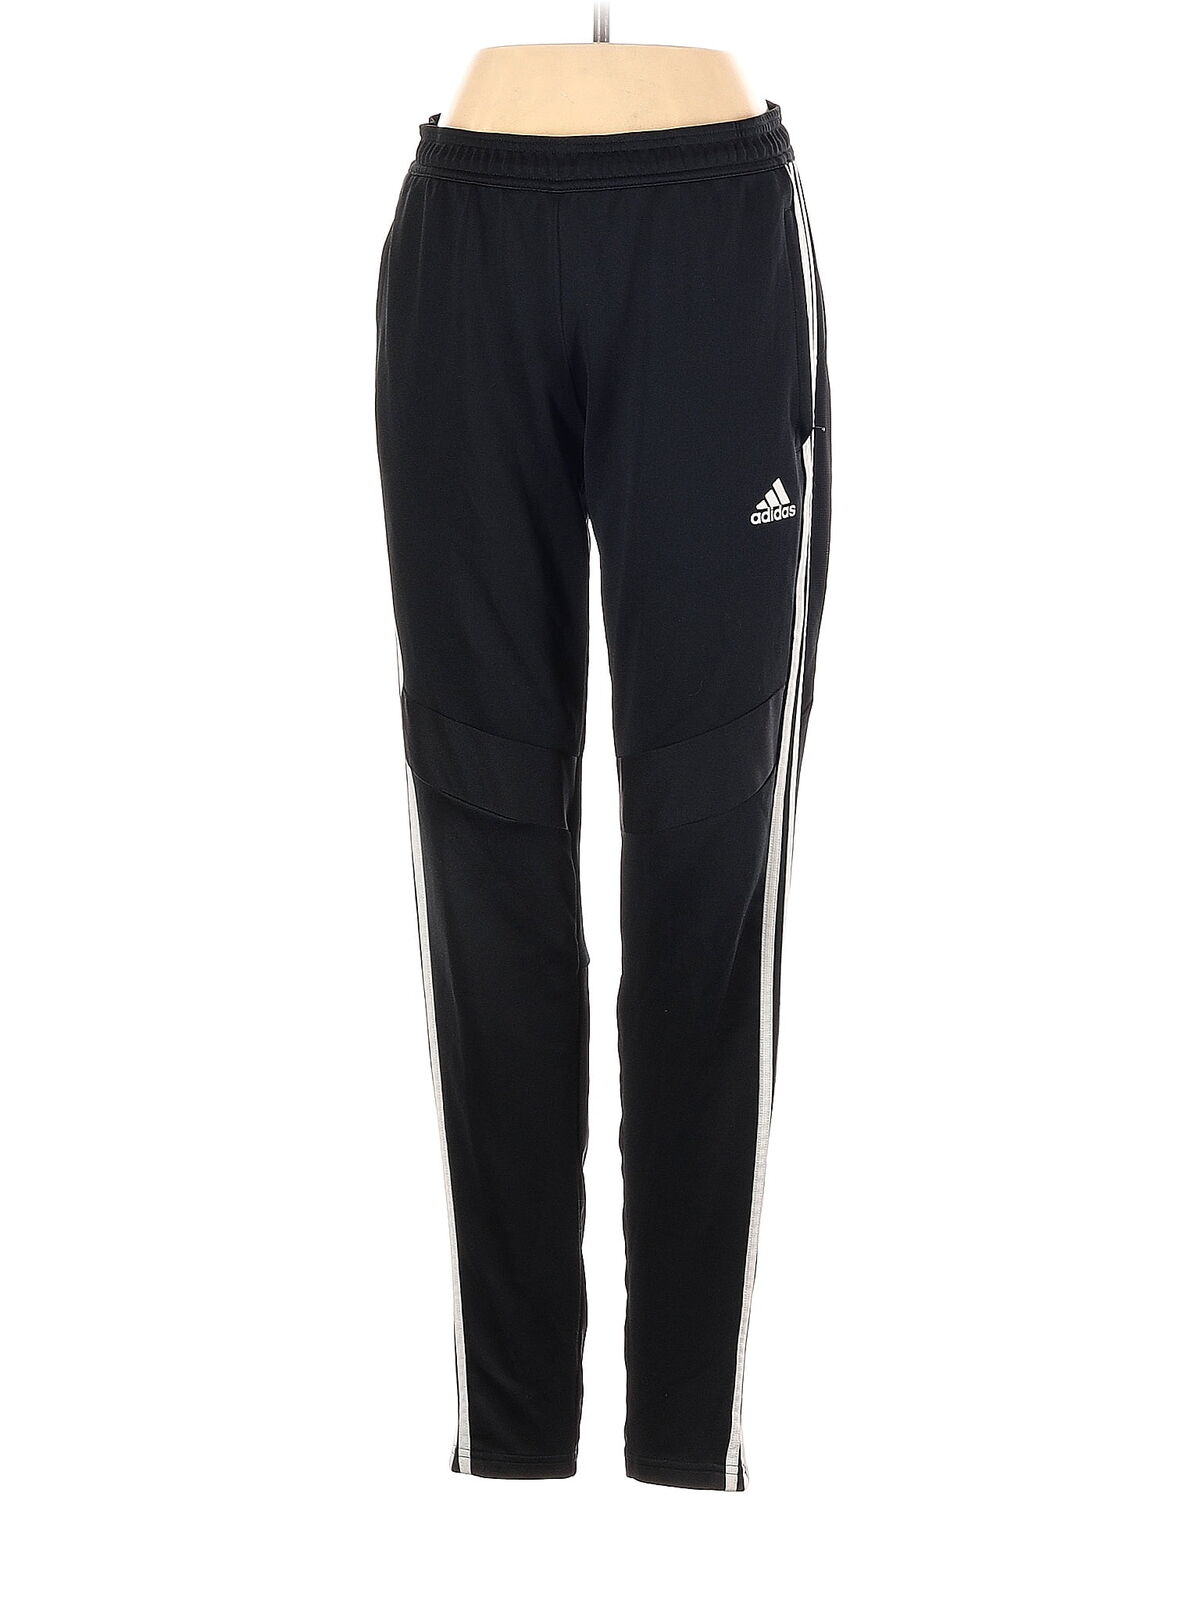 Adidas Women Black Track Pants S - image 1